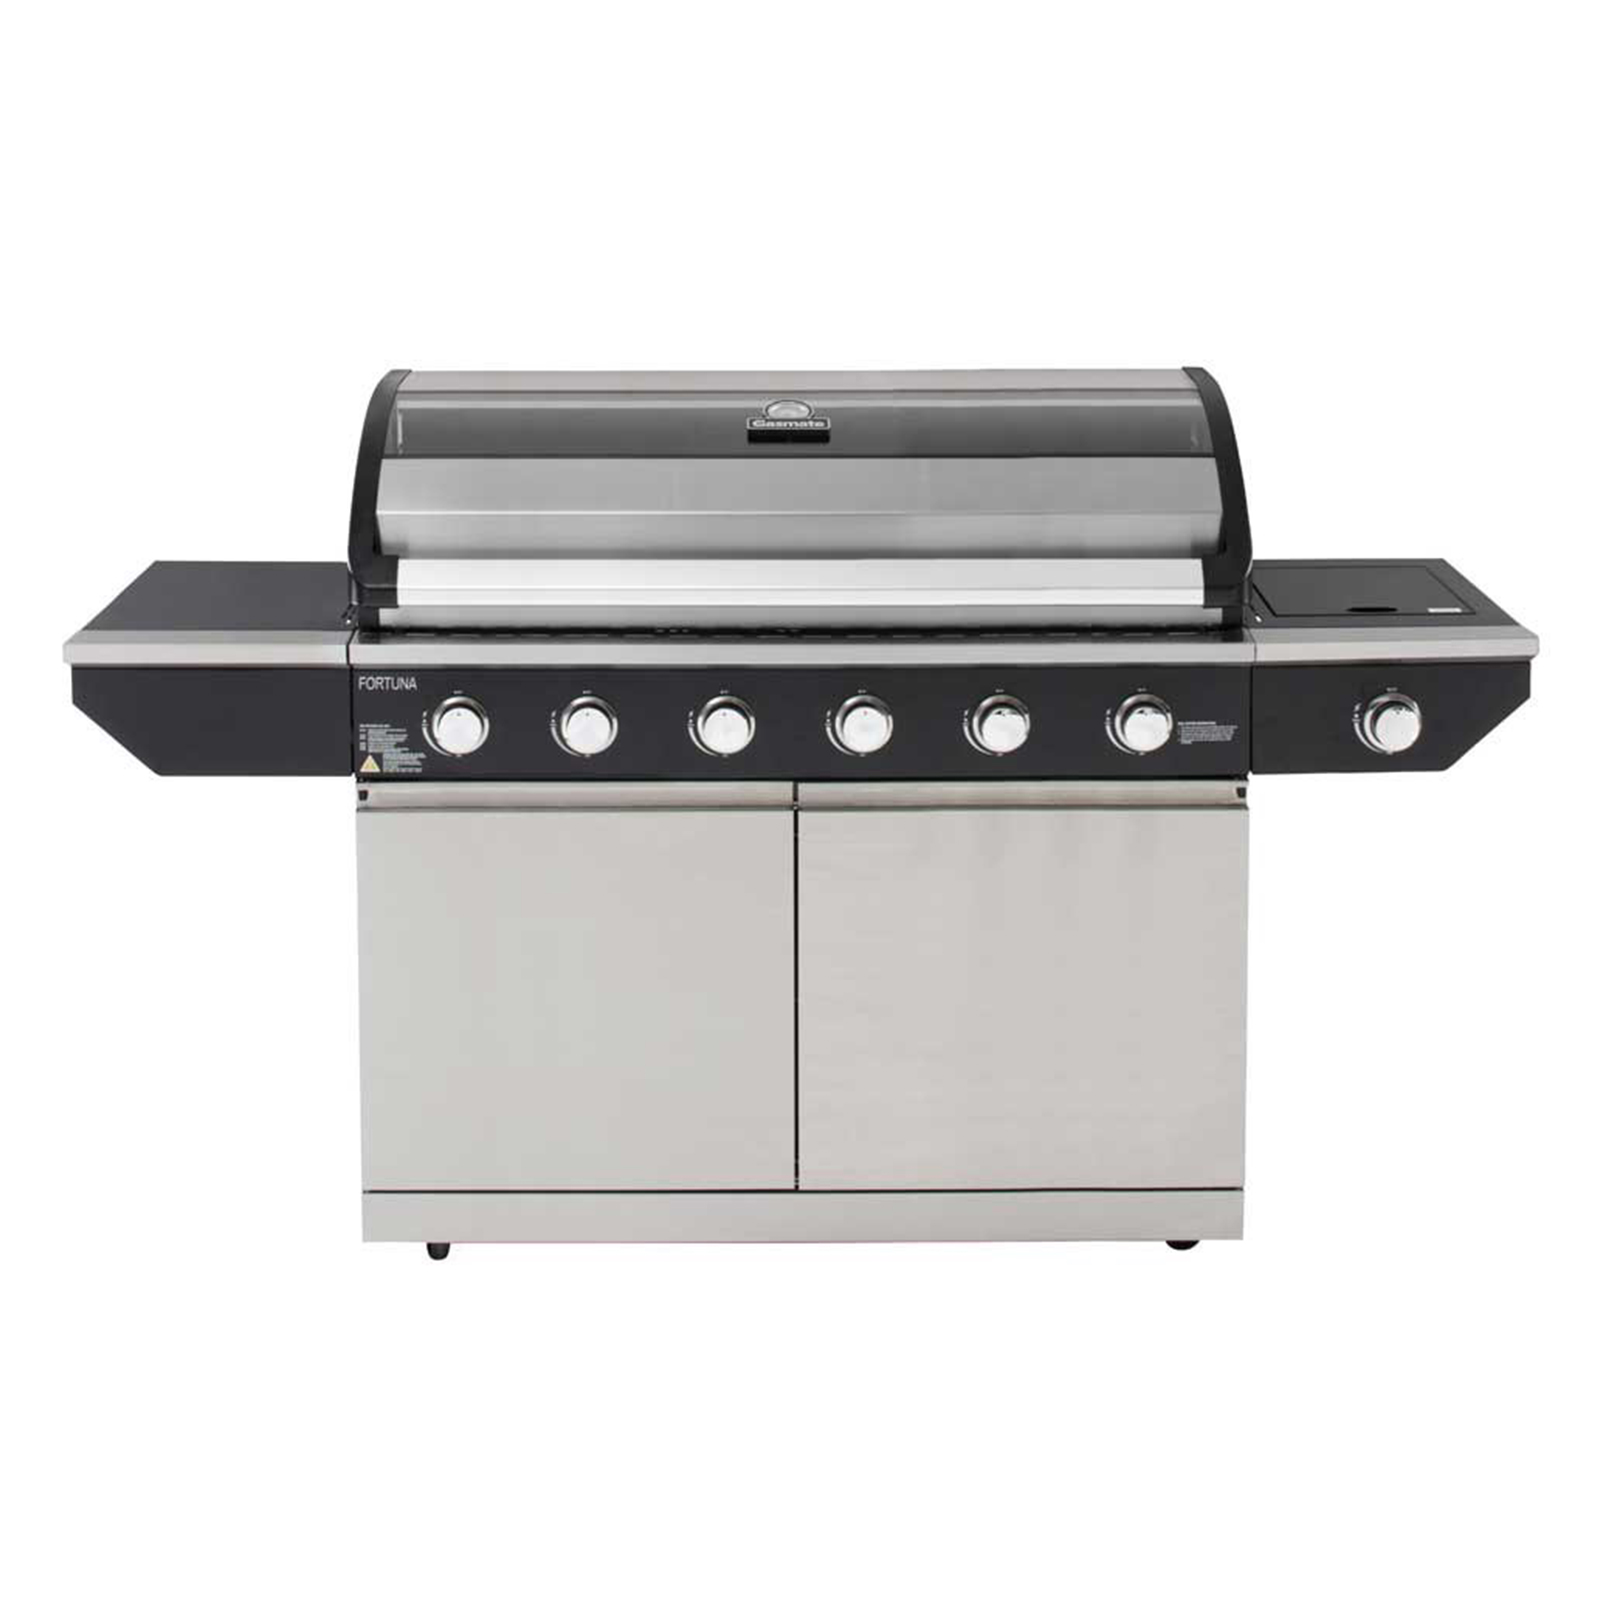 Gasmate outdoor kitchen grill